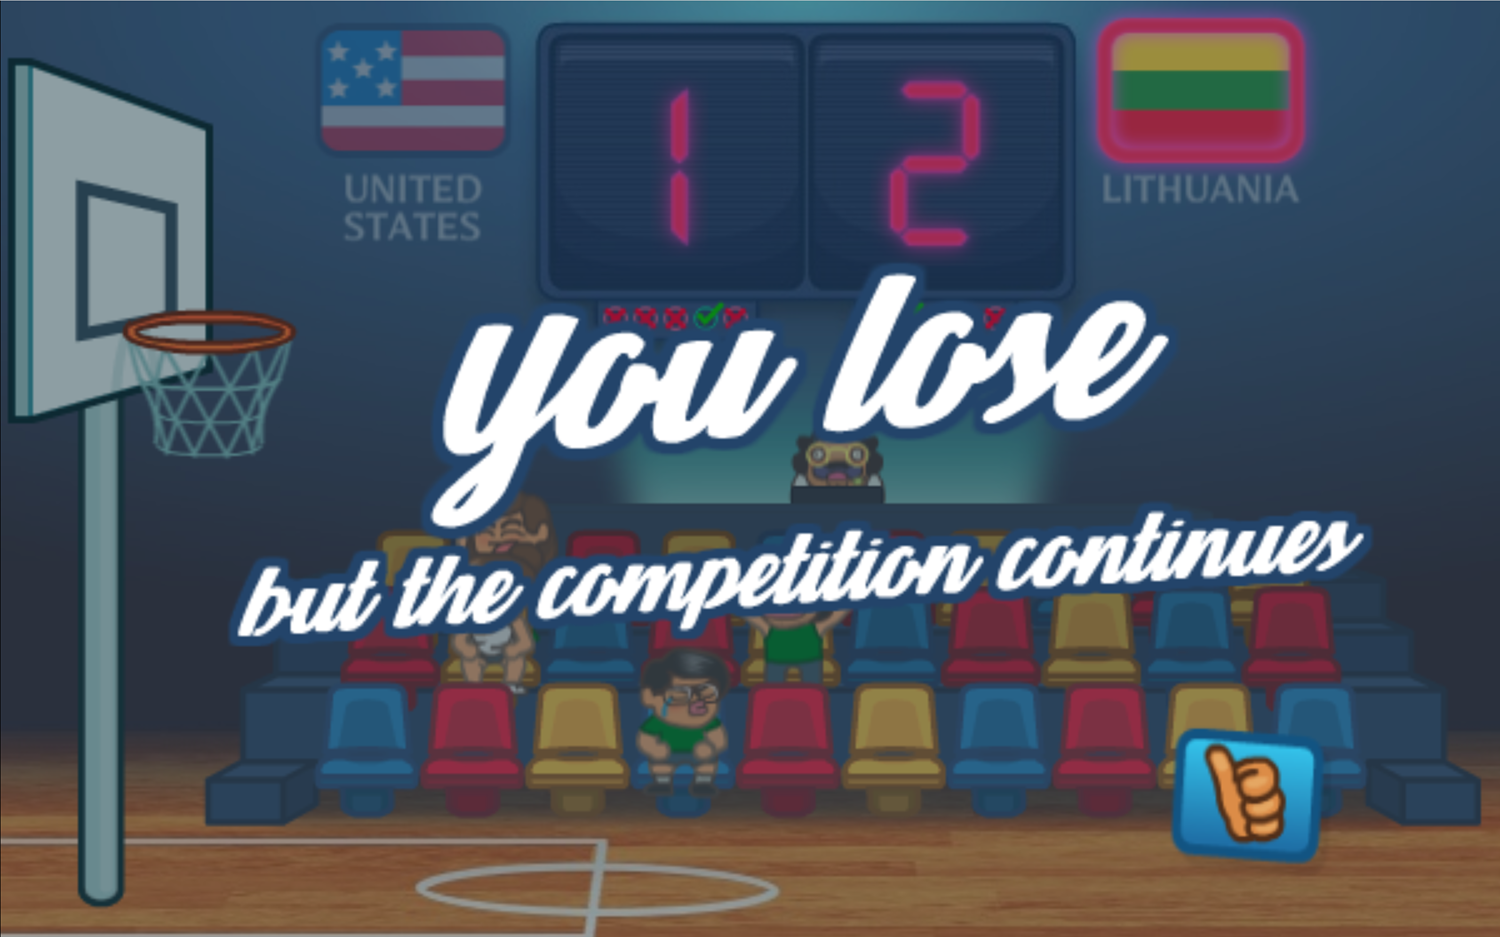 Basket Champs You Lose Screenshot.